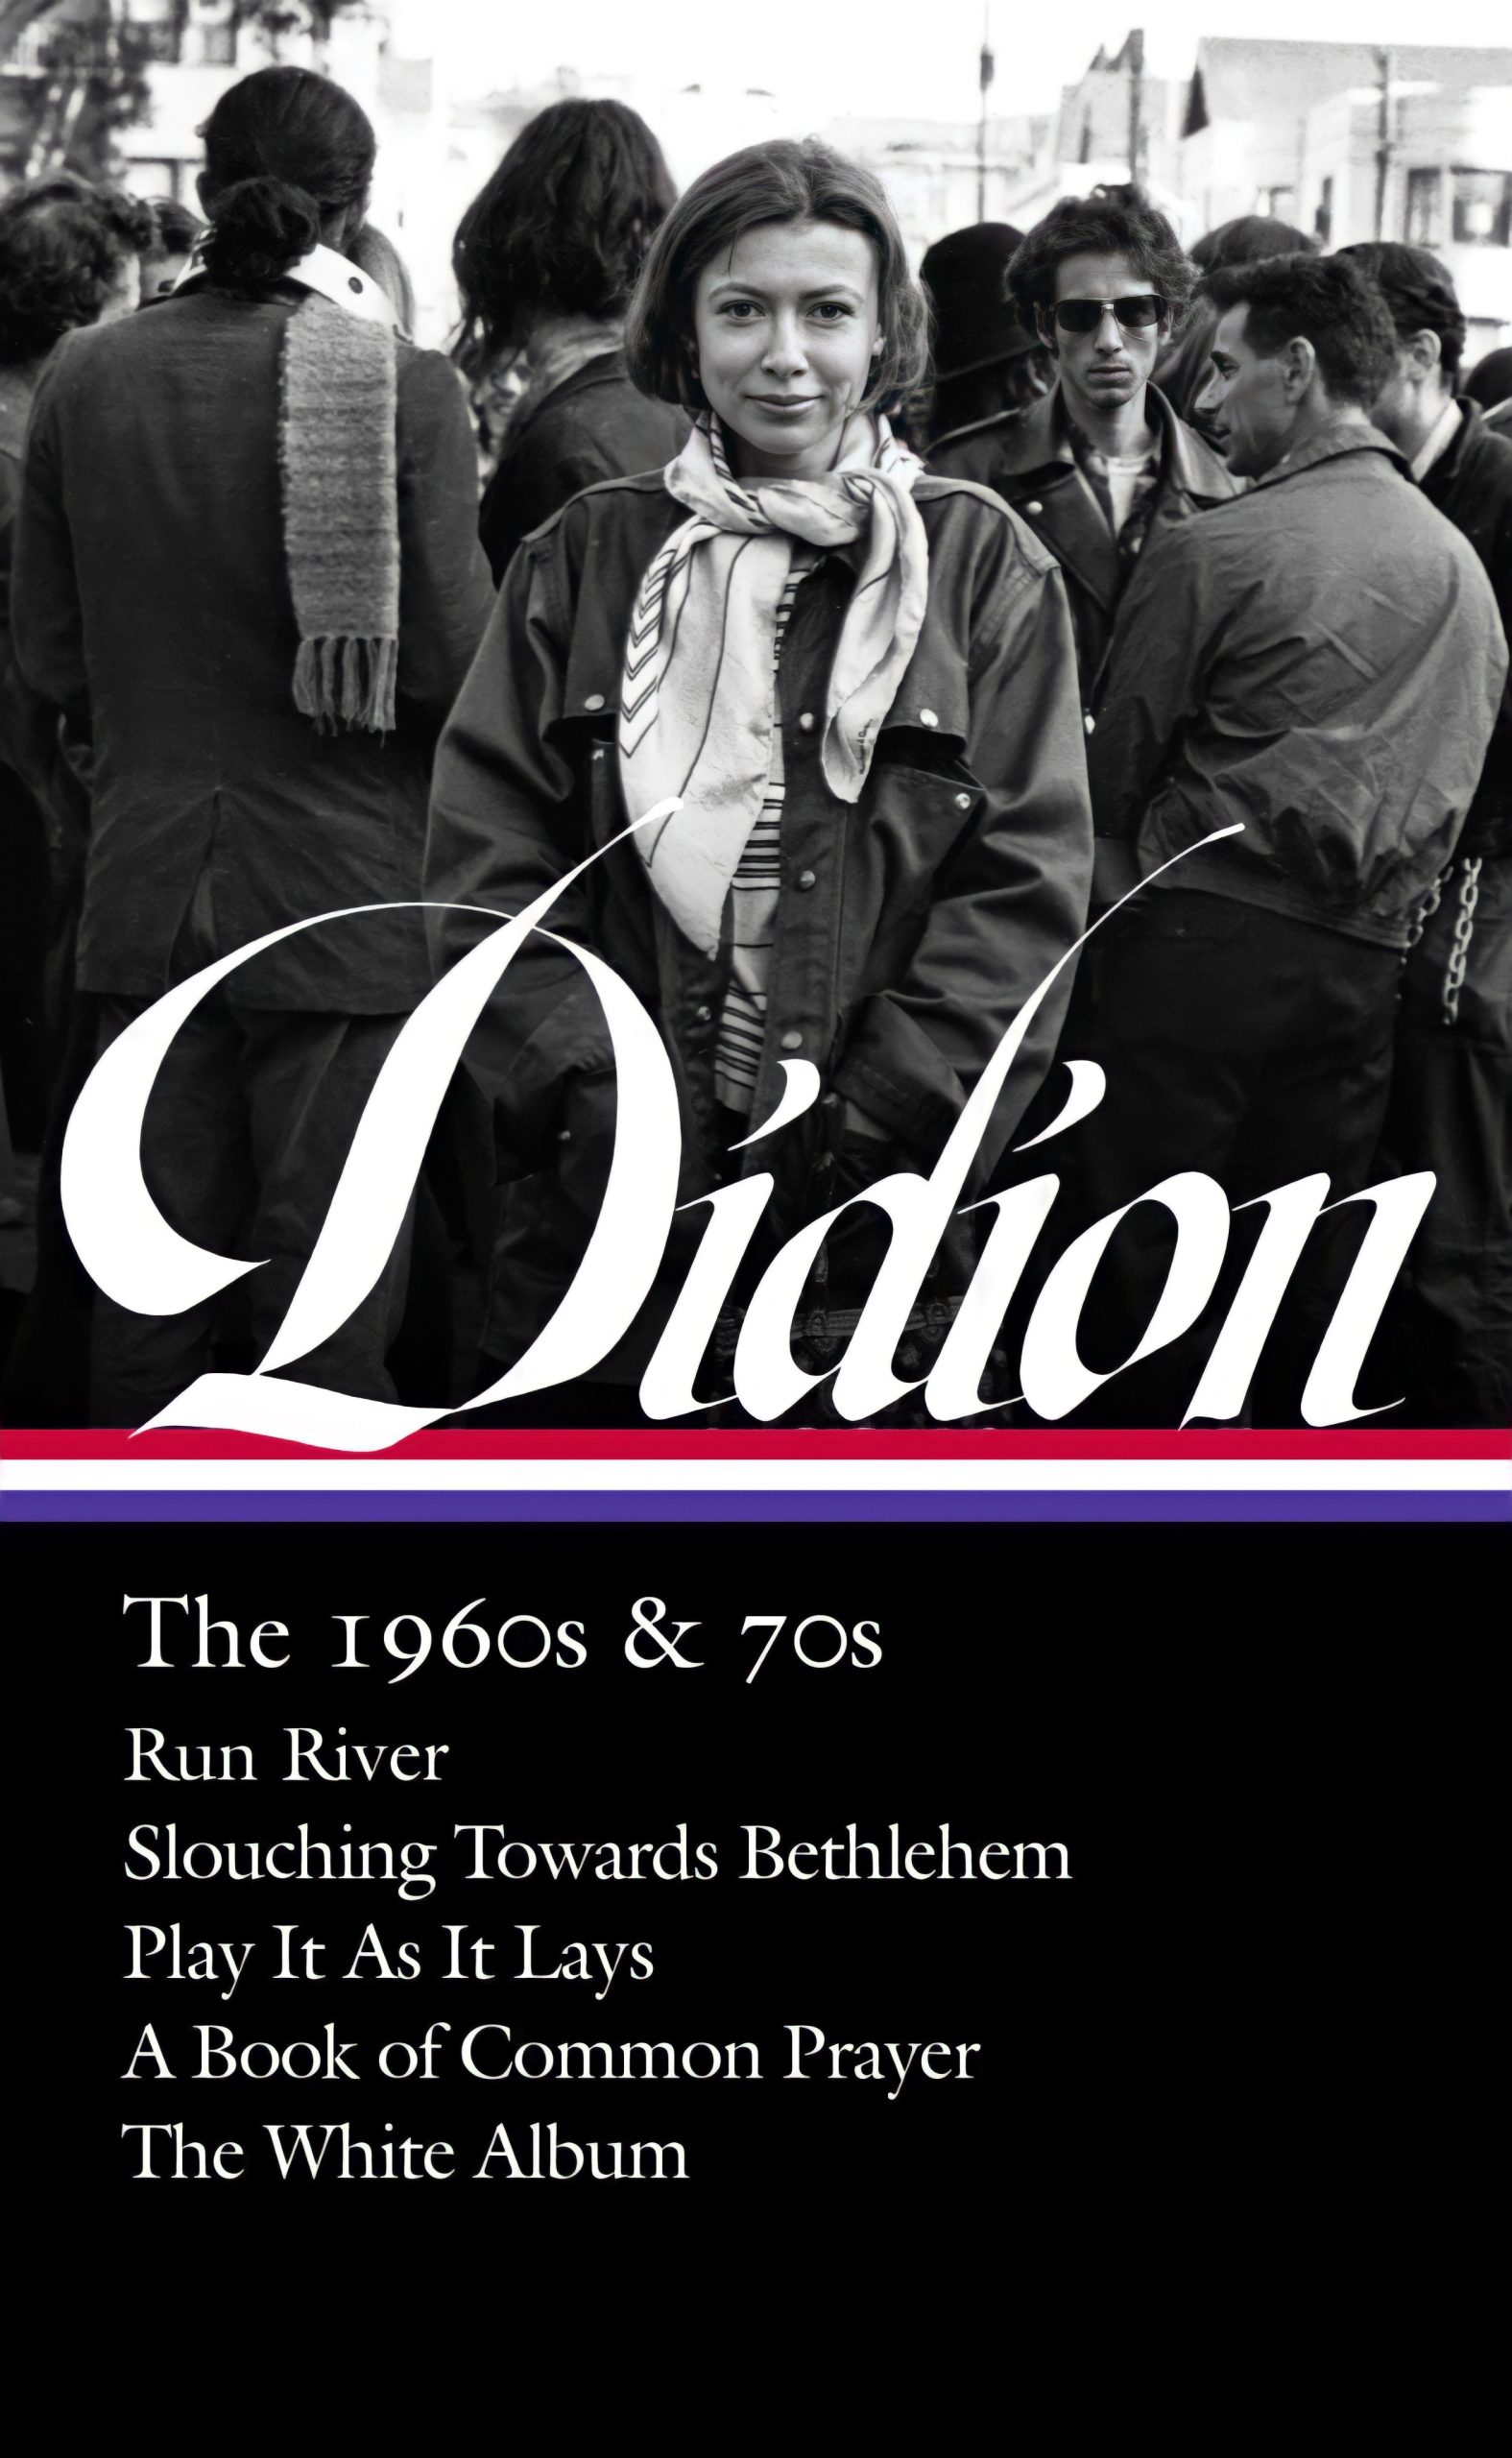 Joan Didion  Academy of Achievement